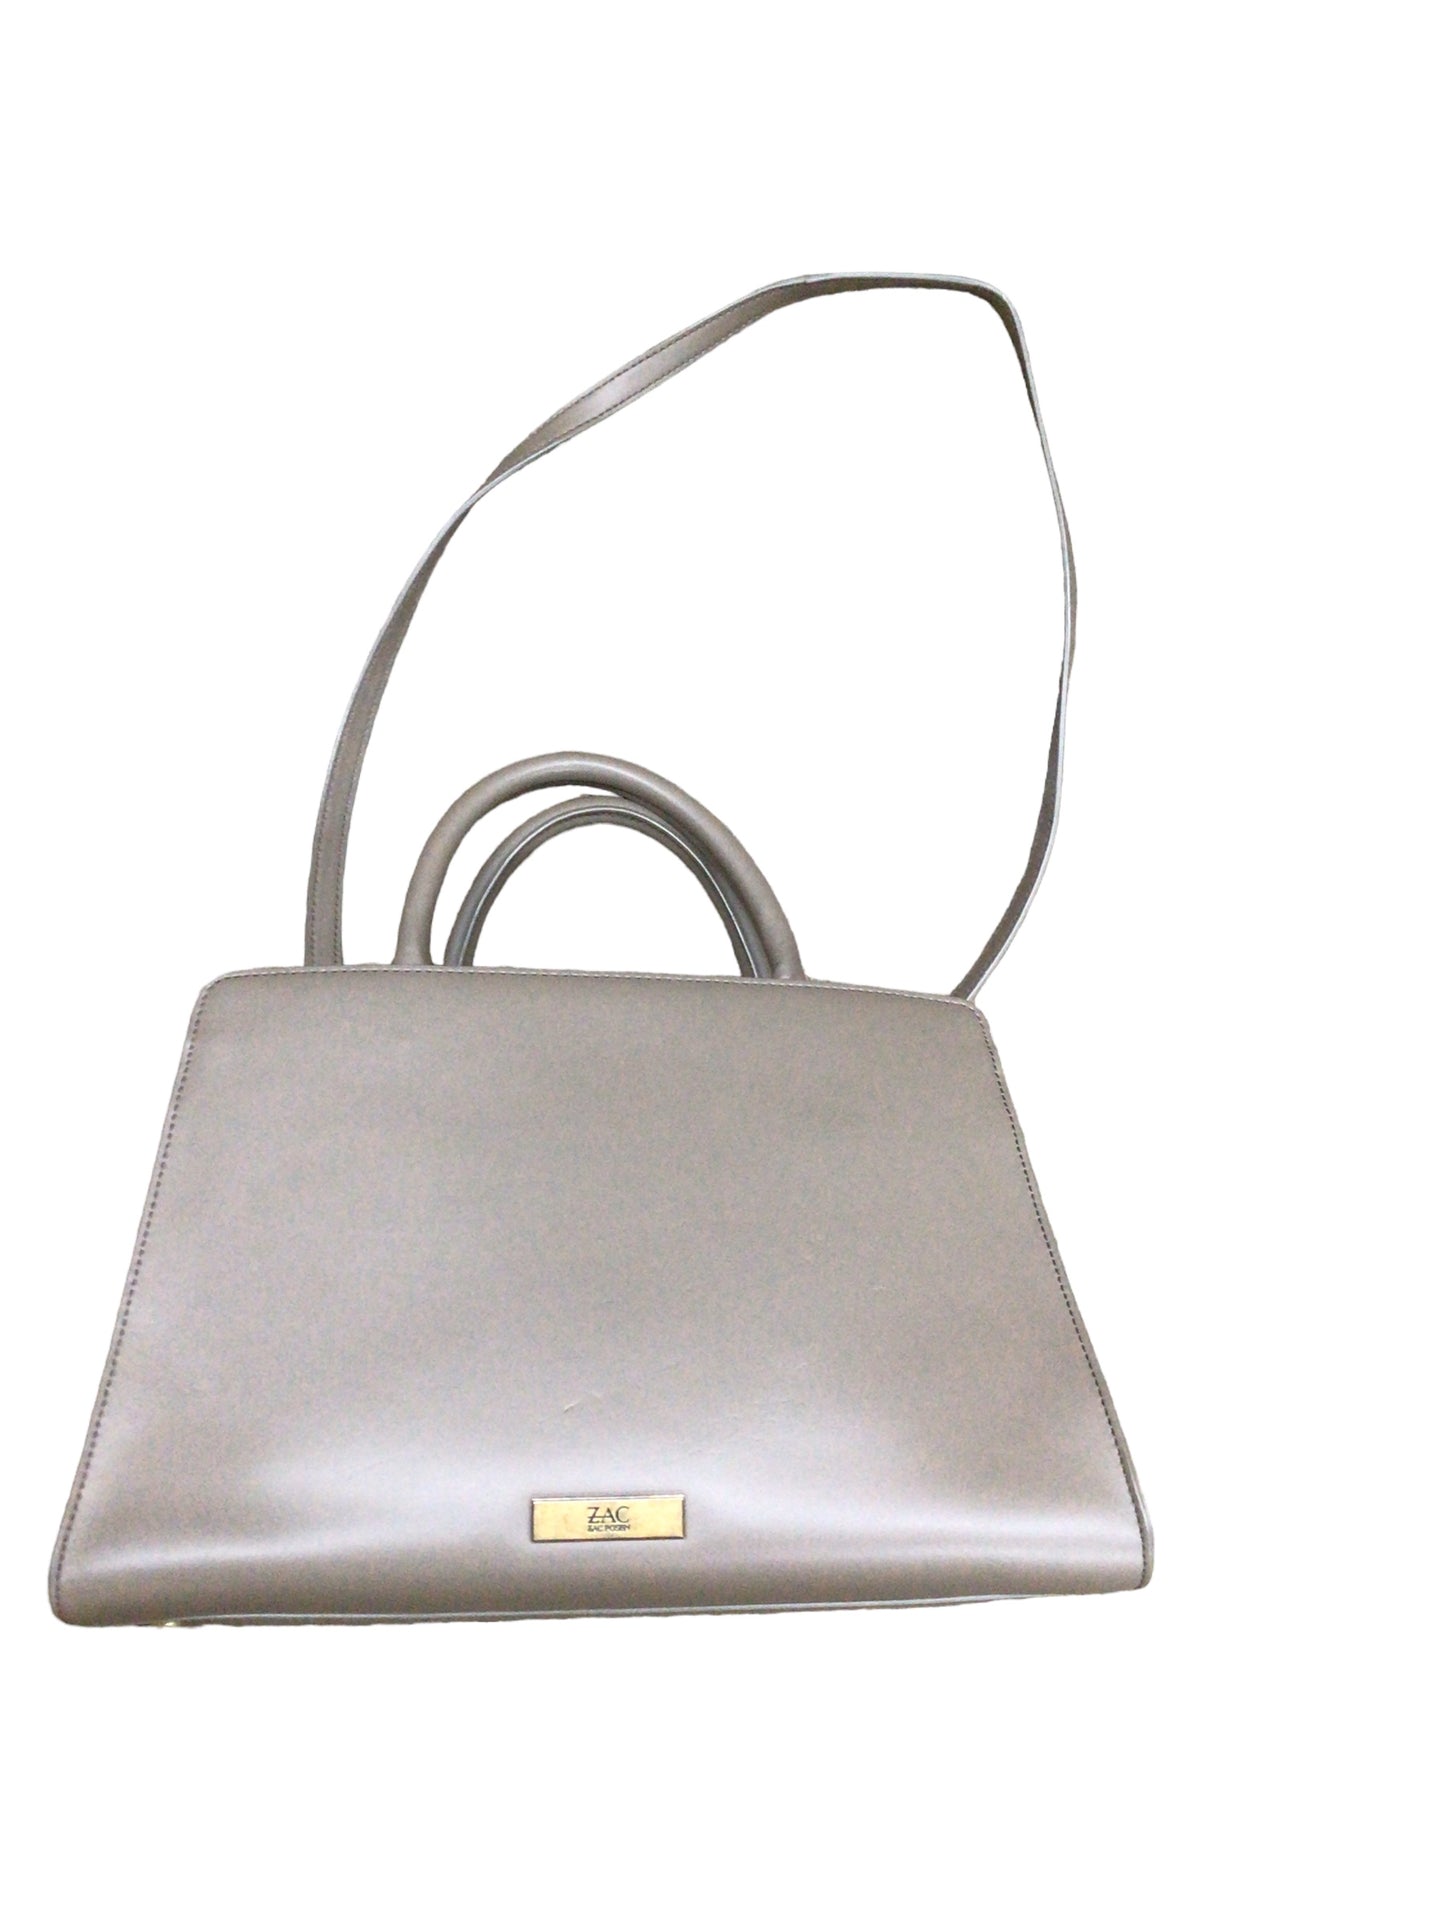 Handbag Designer By Zac Posen  Size: Large